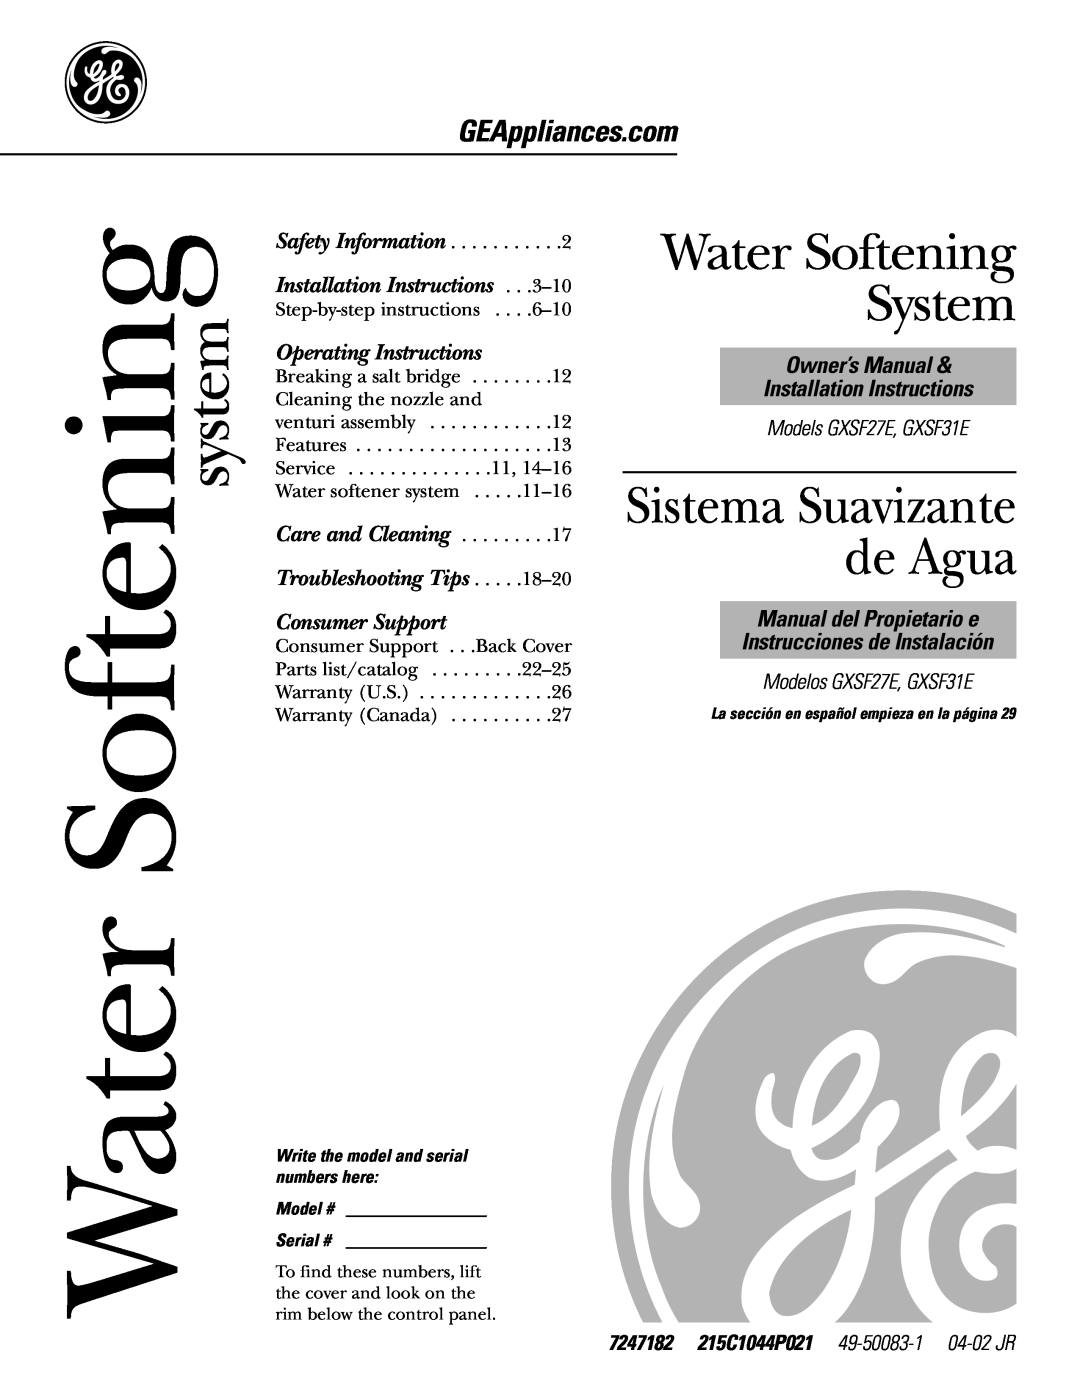 GE GXSF31E installation instructions Water Softening System, Sistema Suavizante de Agua, Water Softening system 